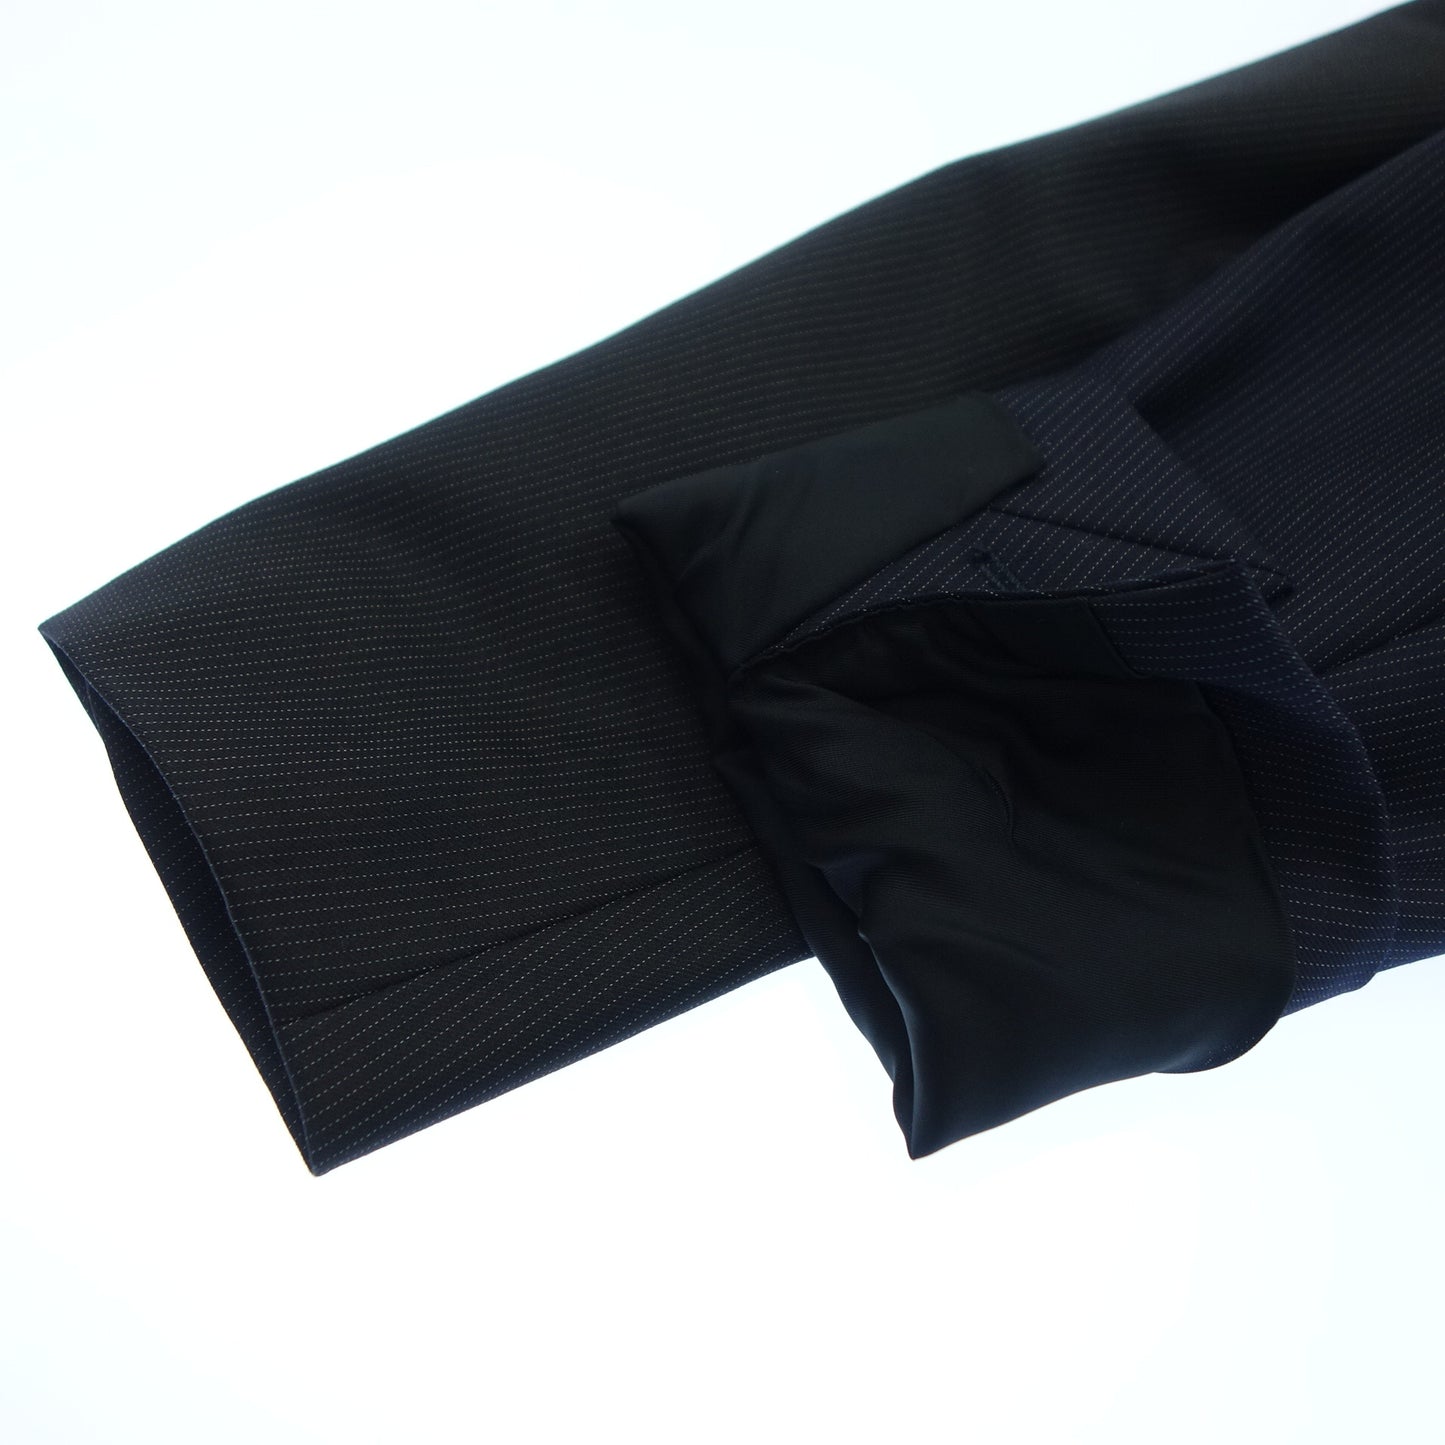 Good Condition◆Fendi Tailored Jacket Stripe 2B Navy Men's 44 Black x Navy FENDI [AFB29] 